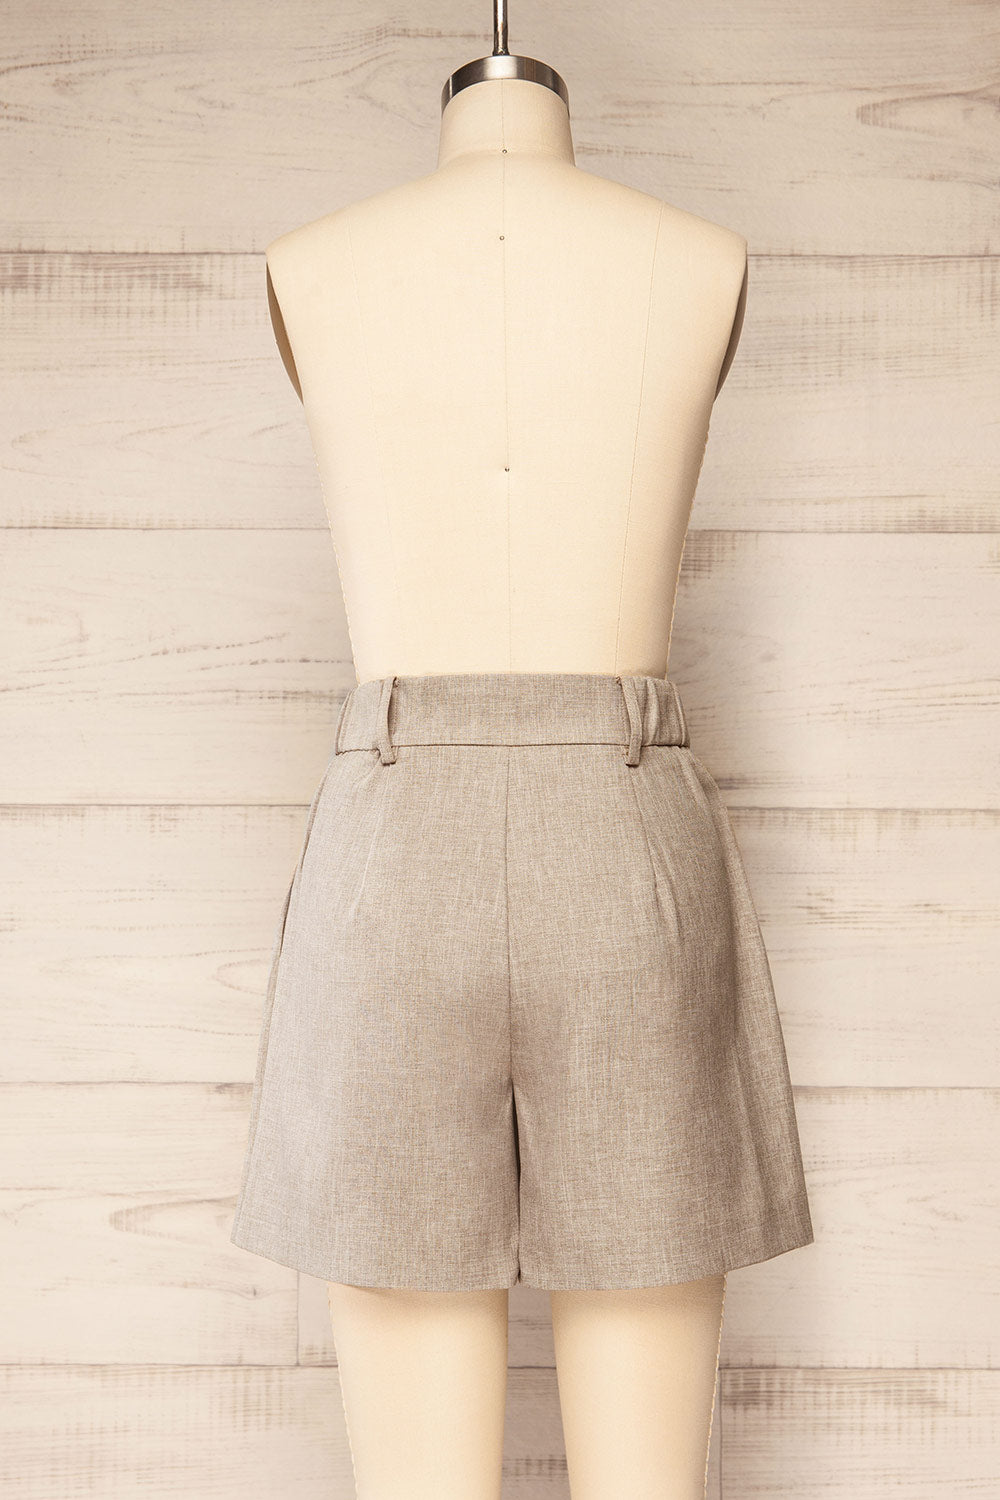 Kunga Grey High-Waisted Shorts w/ Pockets | La petite garçonne back view